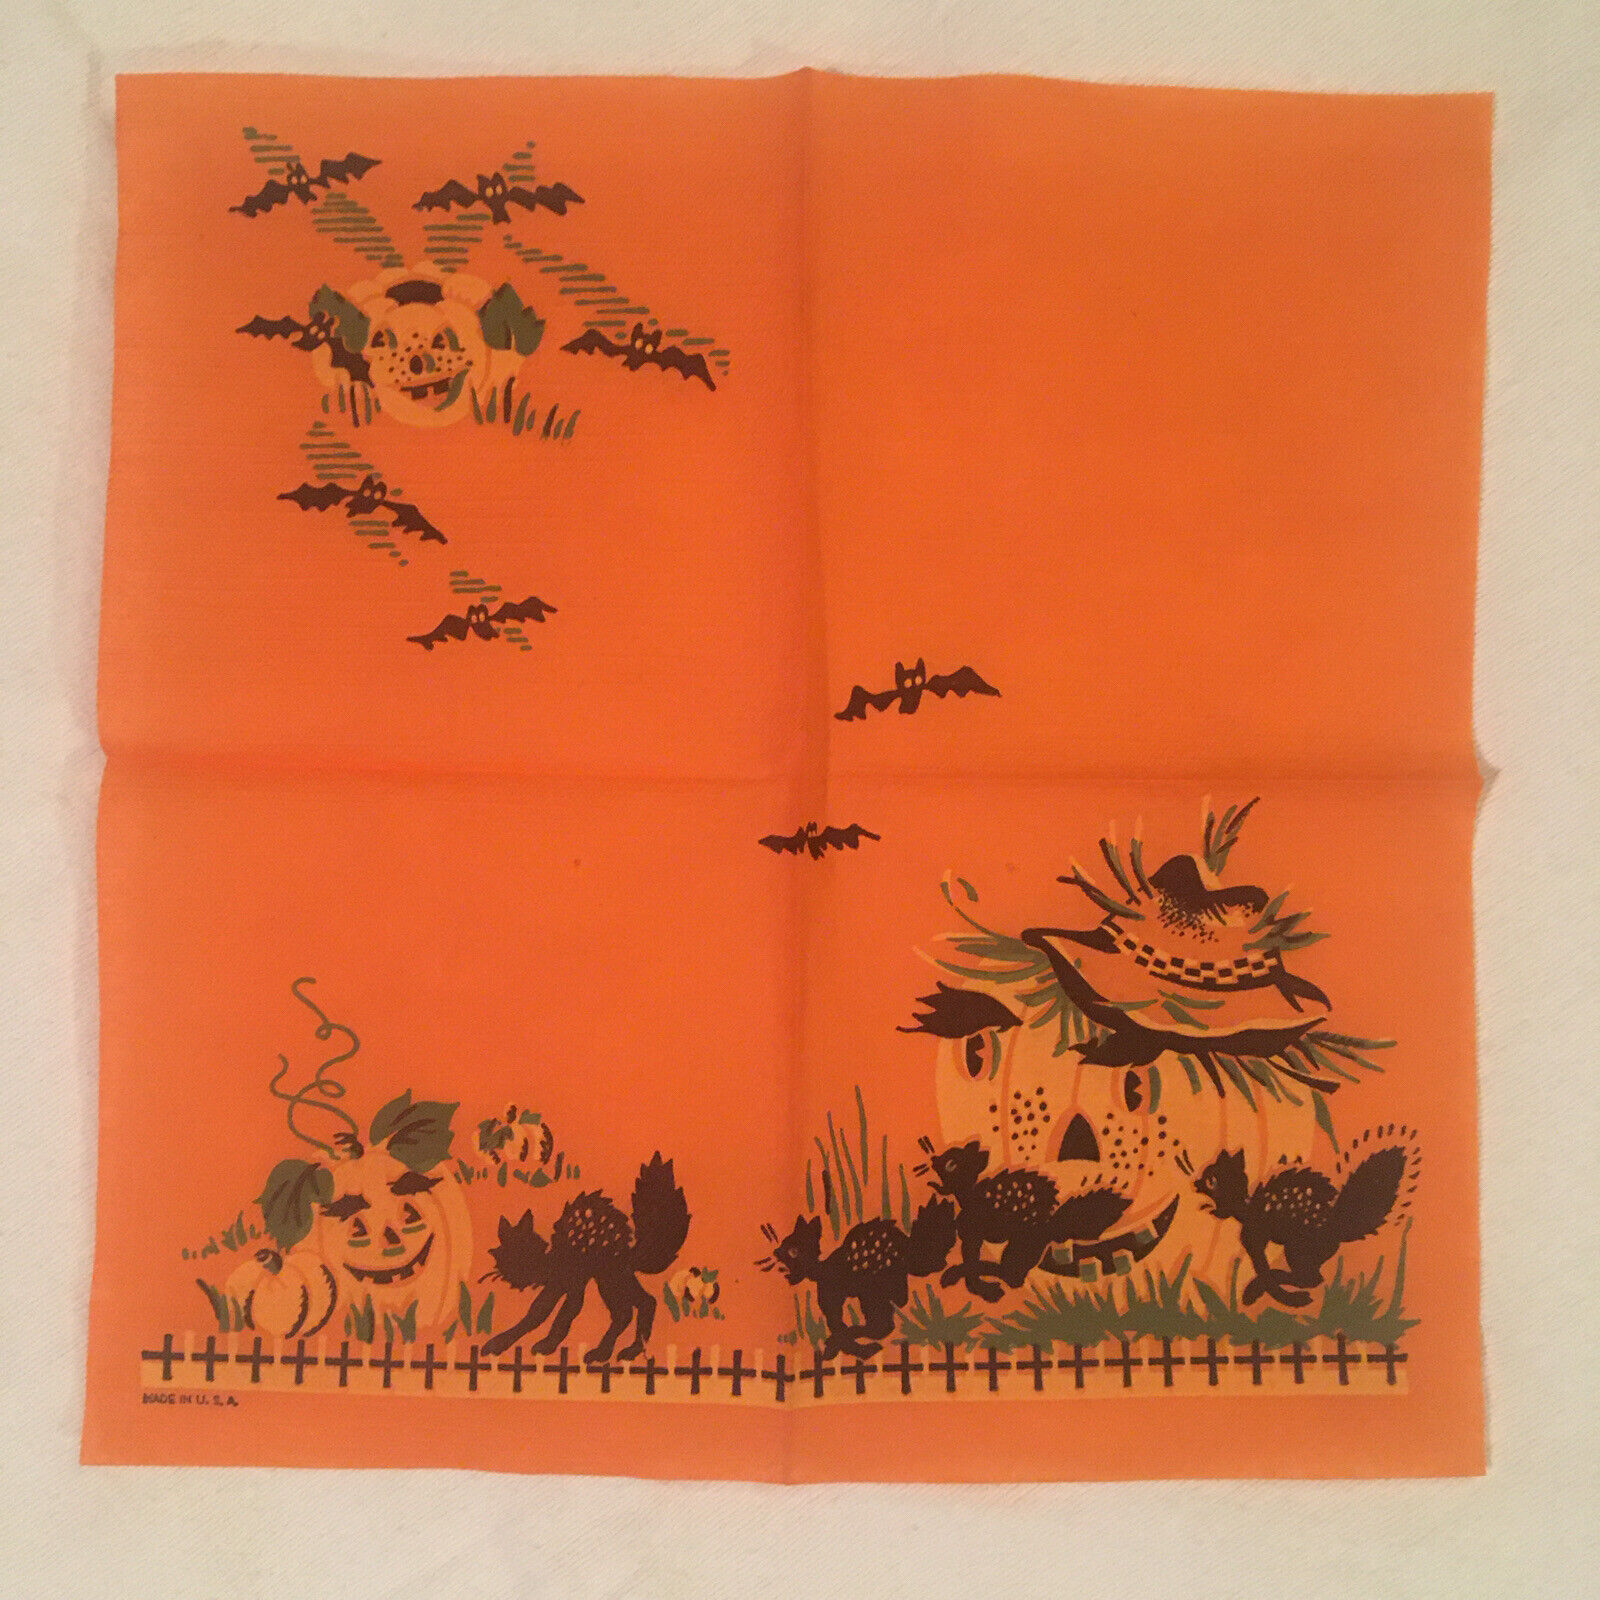 2 (Two) Rare Vintage Halloween Napkins Black Cats Bats Jack O’ Lantern Orange